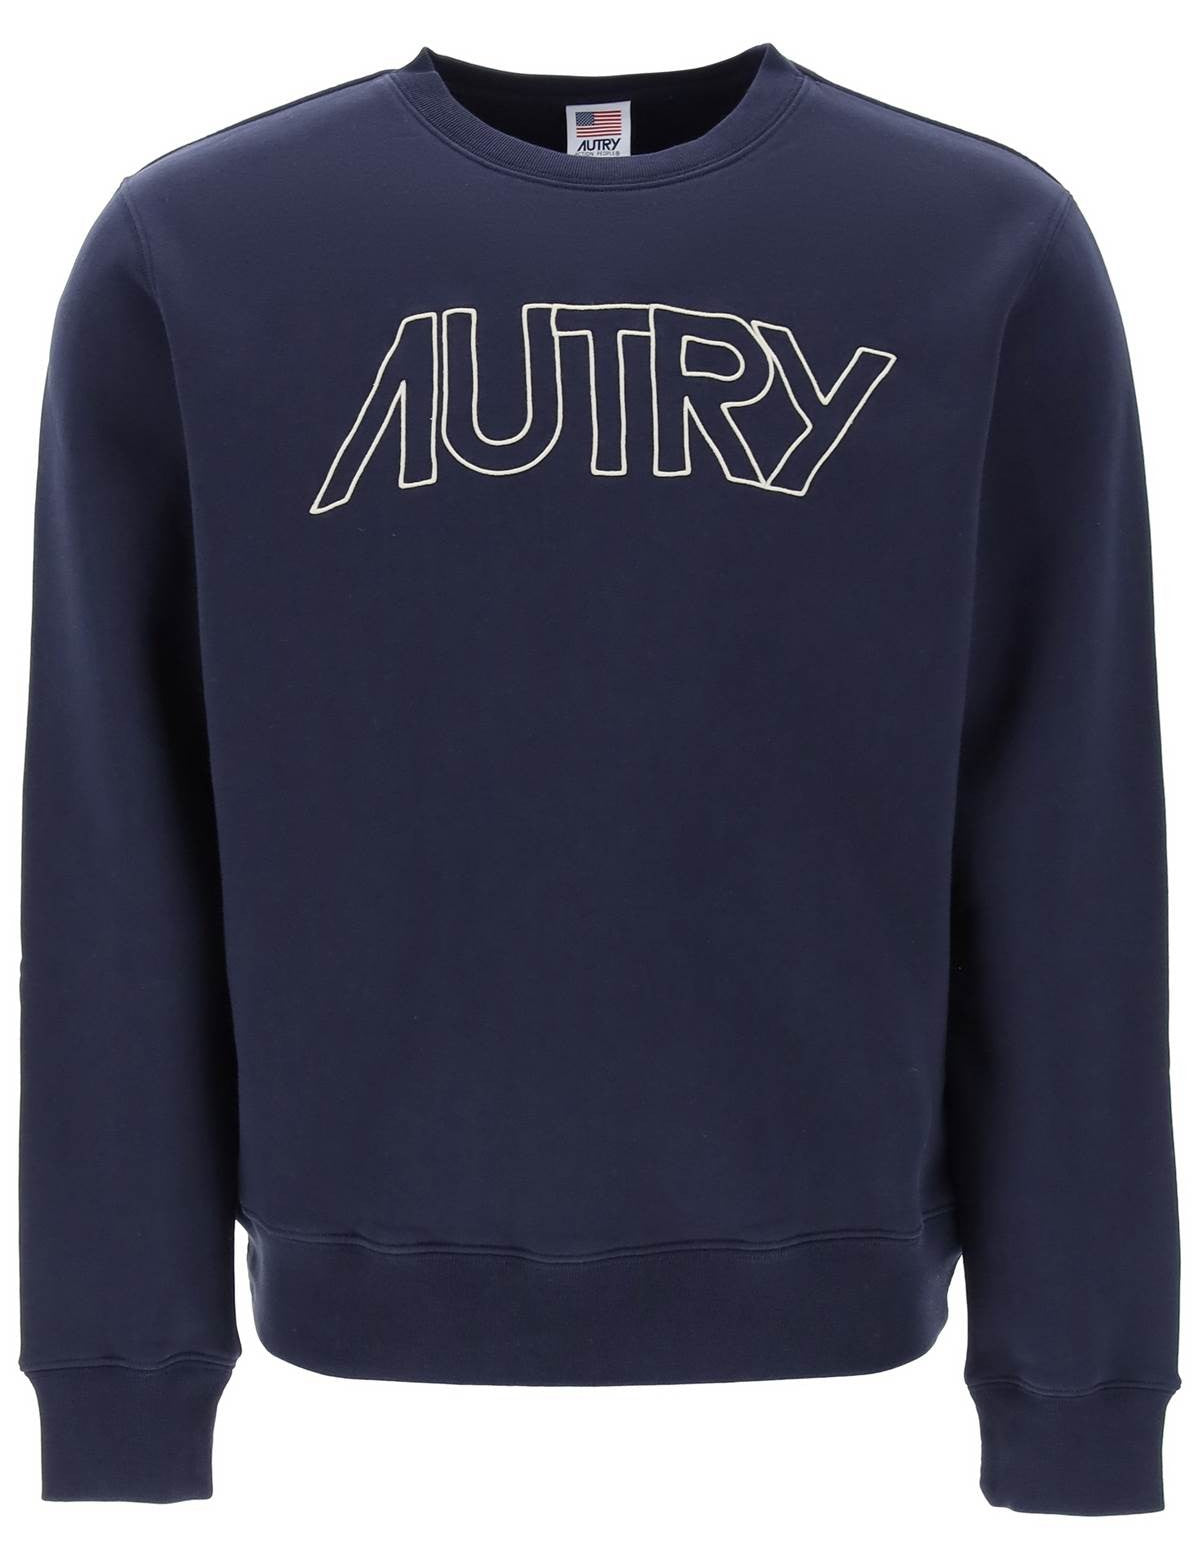 autry-crew-neck-sweatshirt-with-logo-embroidery_e3fb4b13-c192-4f2c-b97a-07946d452156.jpg